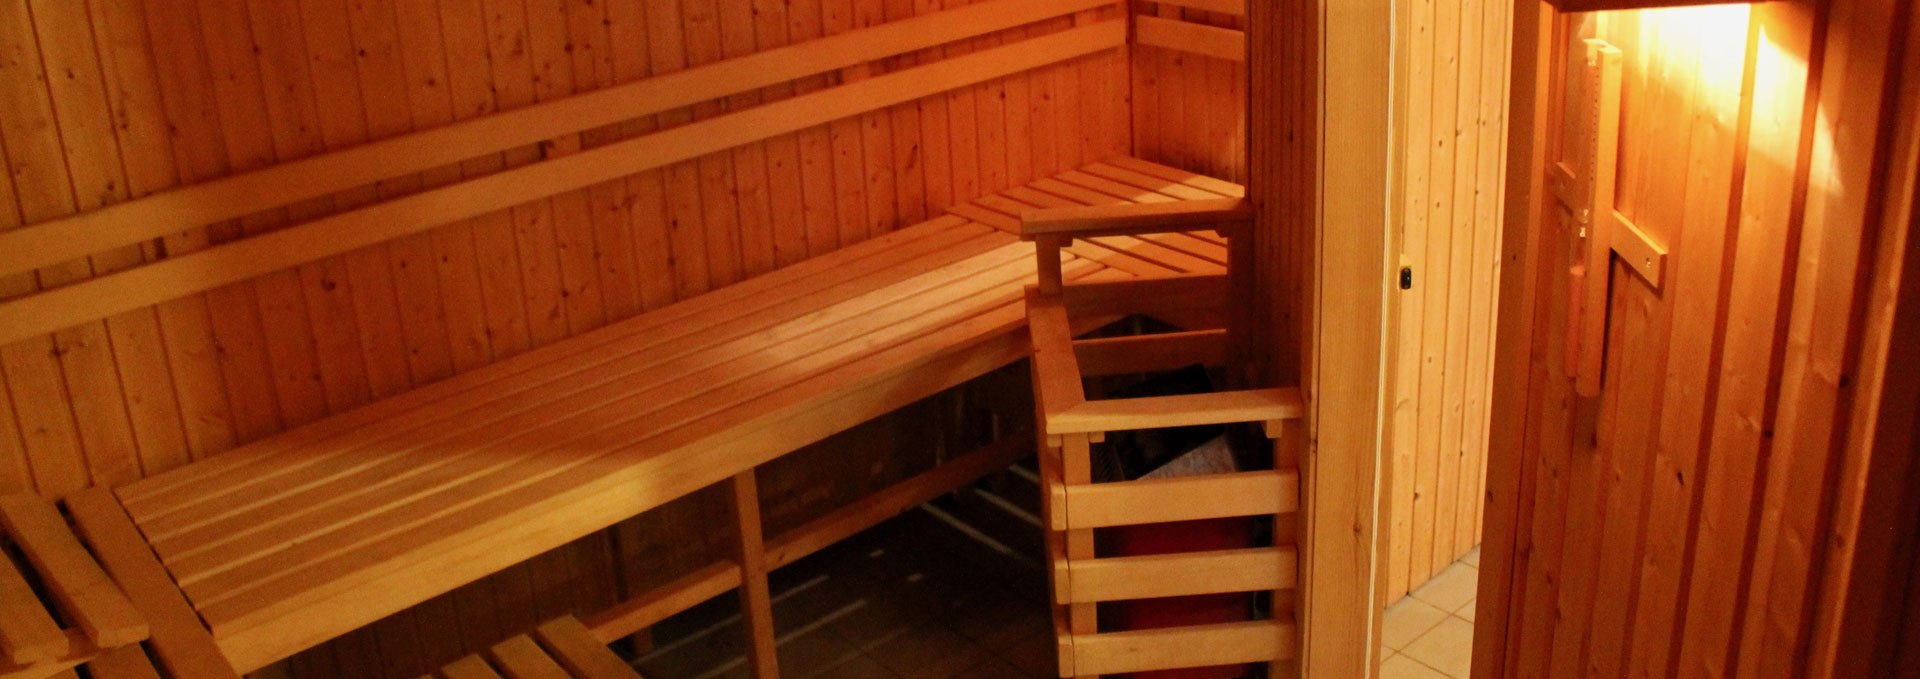 Finnische Sauna, © Verein für innovative Jugendbildung e.V.